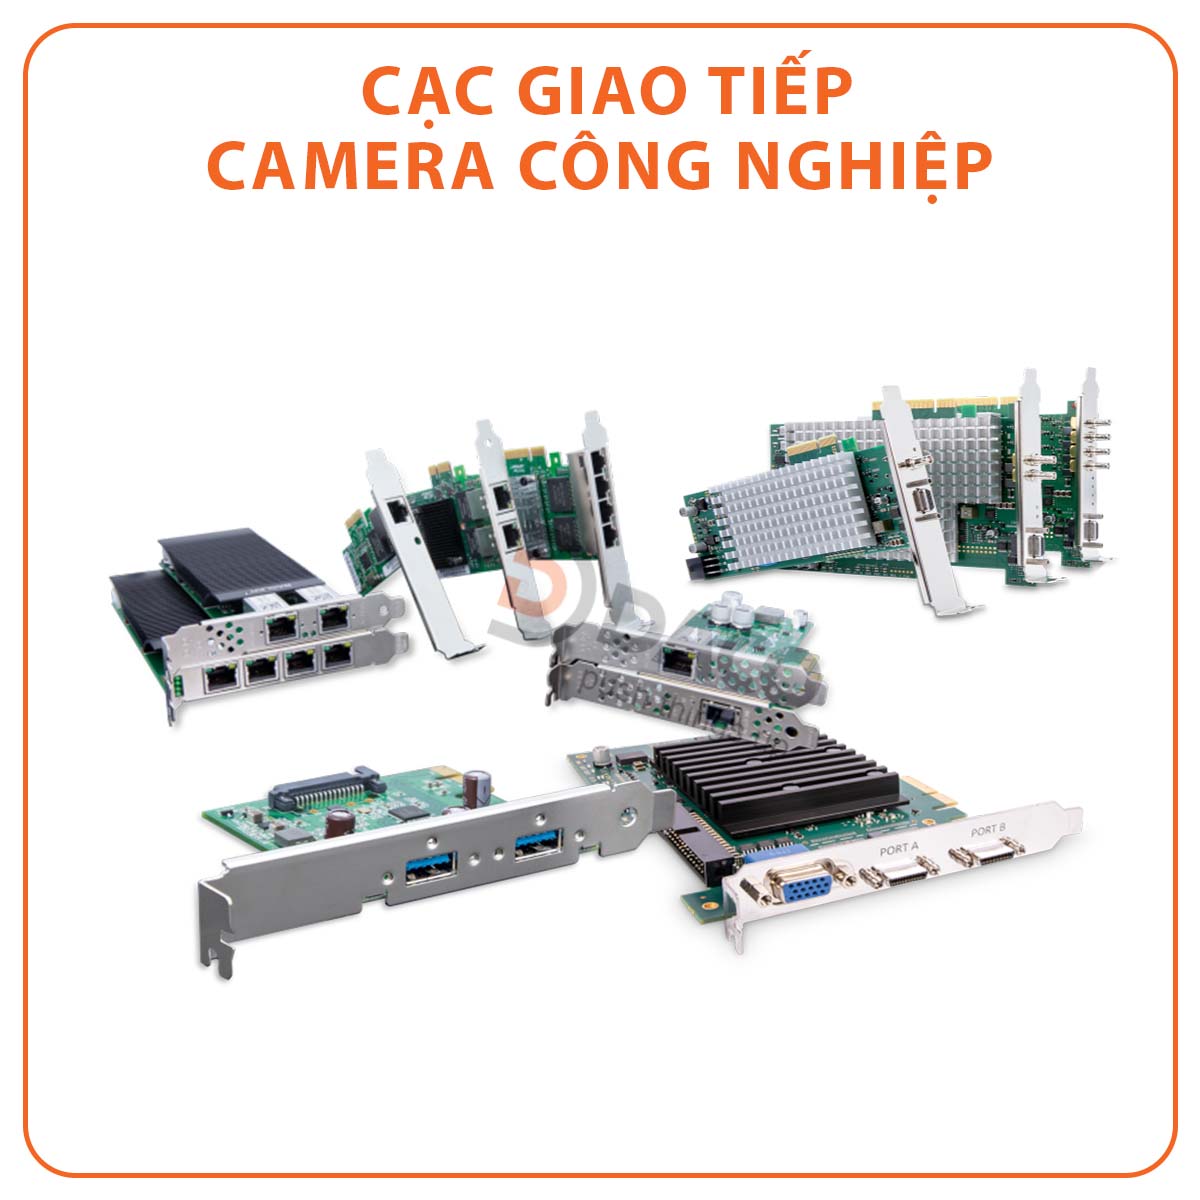 a2A5328-4gmBAS Camera Công Nghiệp Basler Ace 2 Basic, 24.4 MP, IMX540, Mono, Gig Cac_card_giao_tiep_camera_cong_nghiep_basler_port_interface